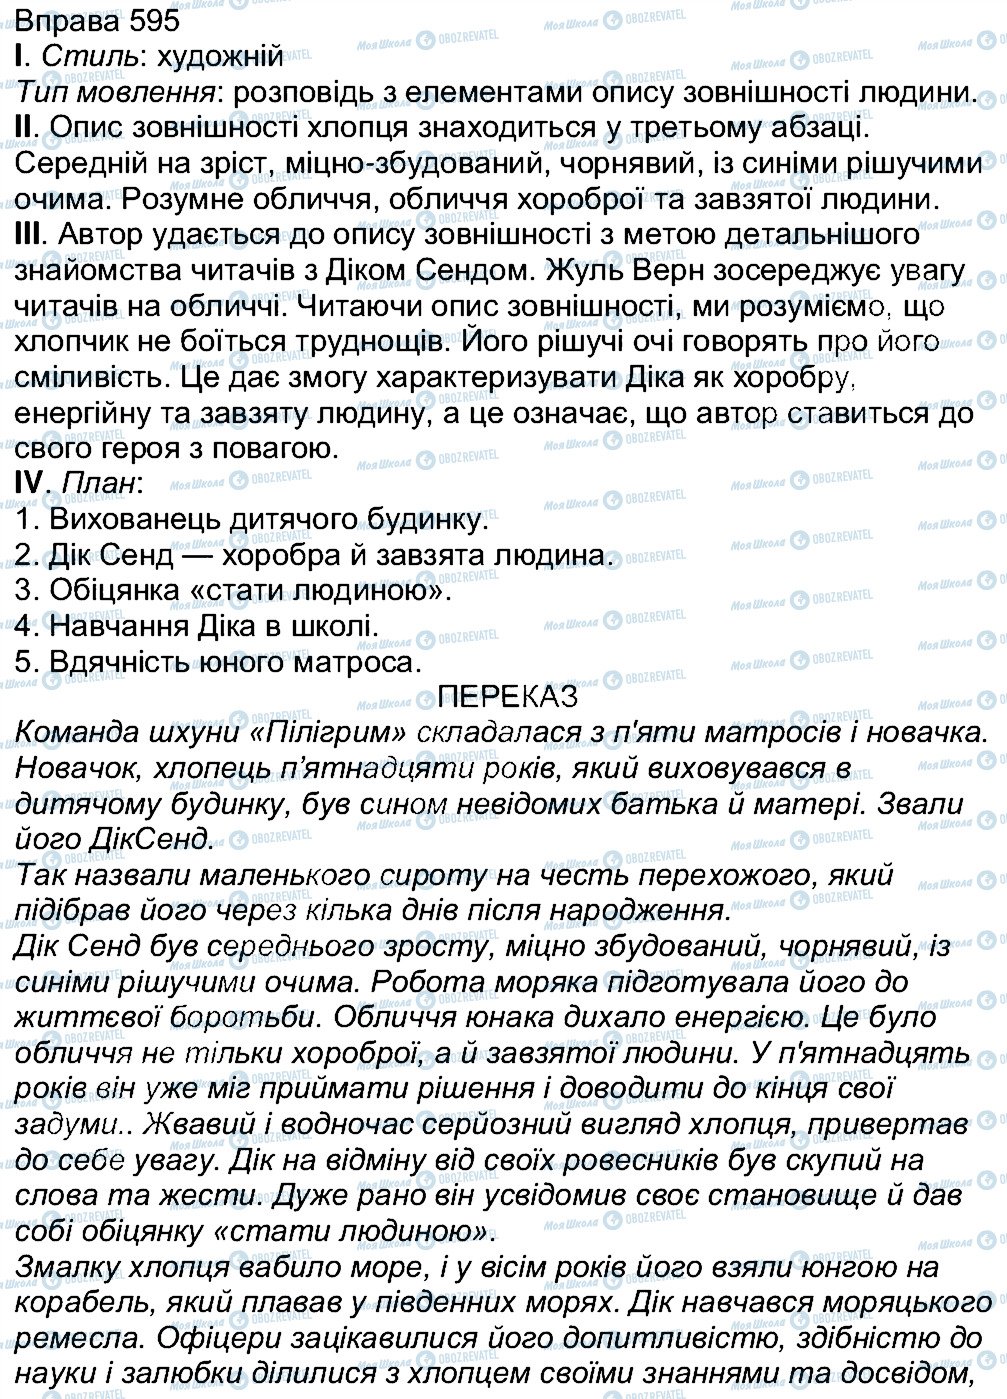 ГДЗ Укр мова 7 класс страница 595